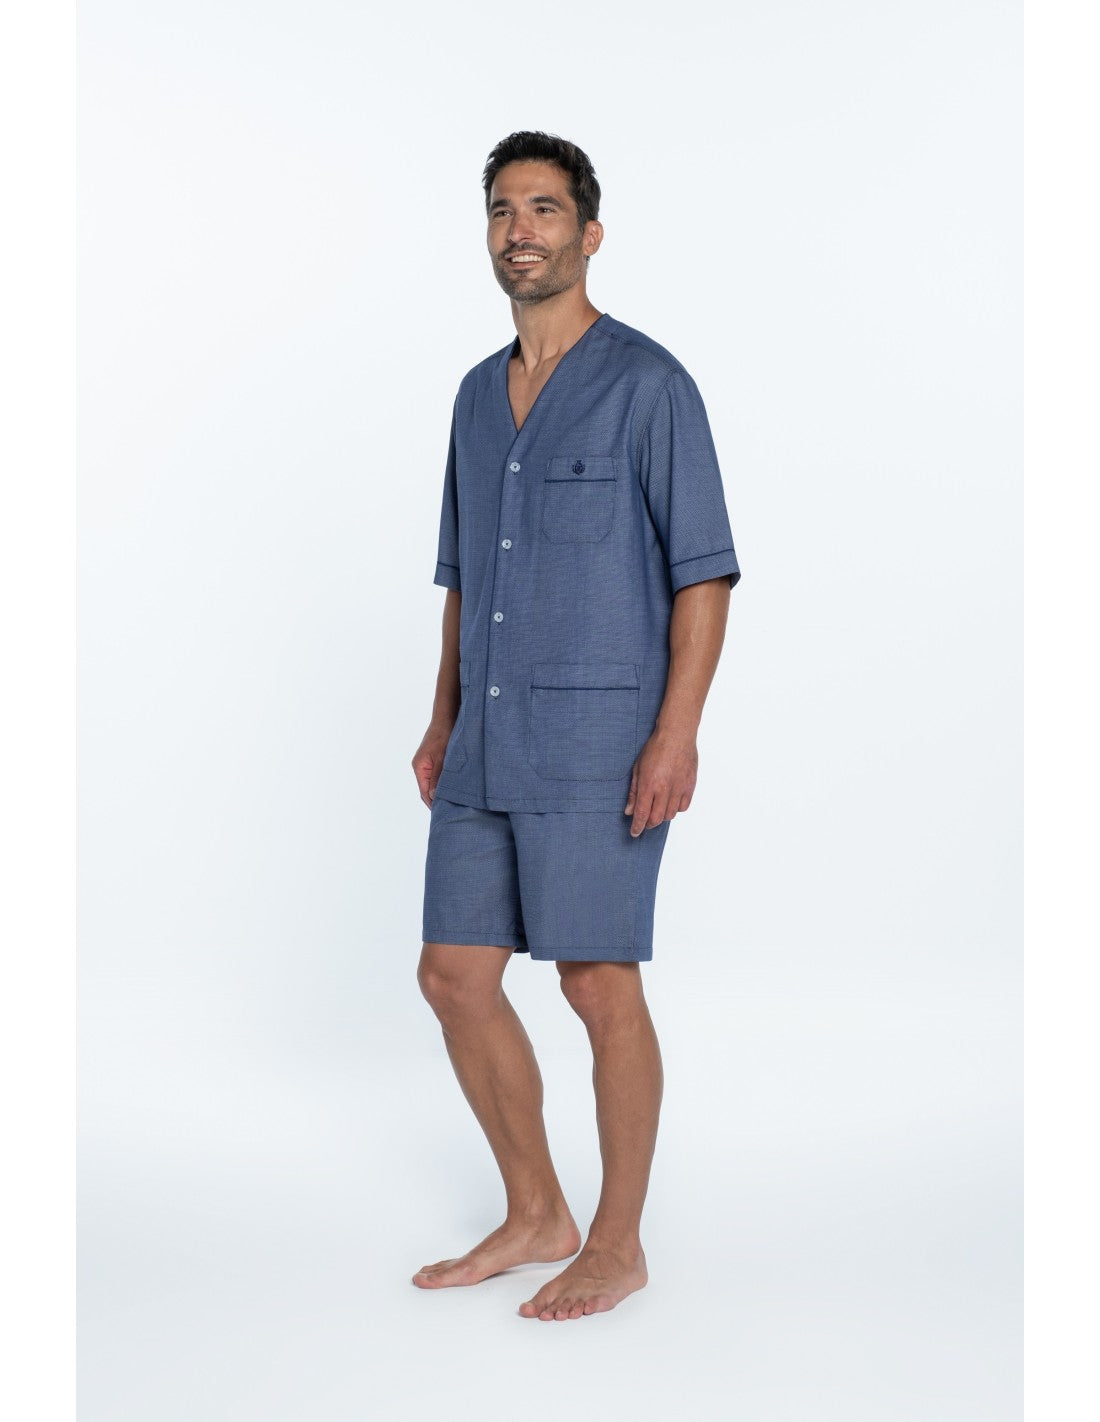 Pijama corto popelín raya fina marino